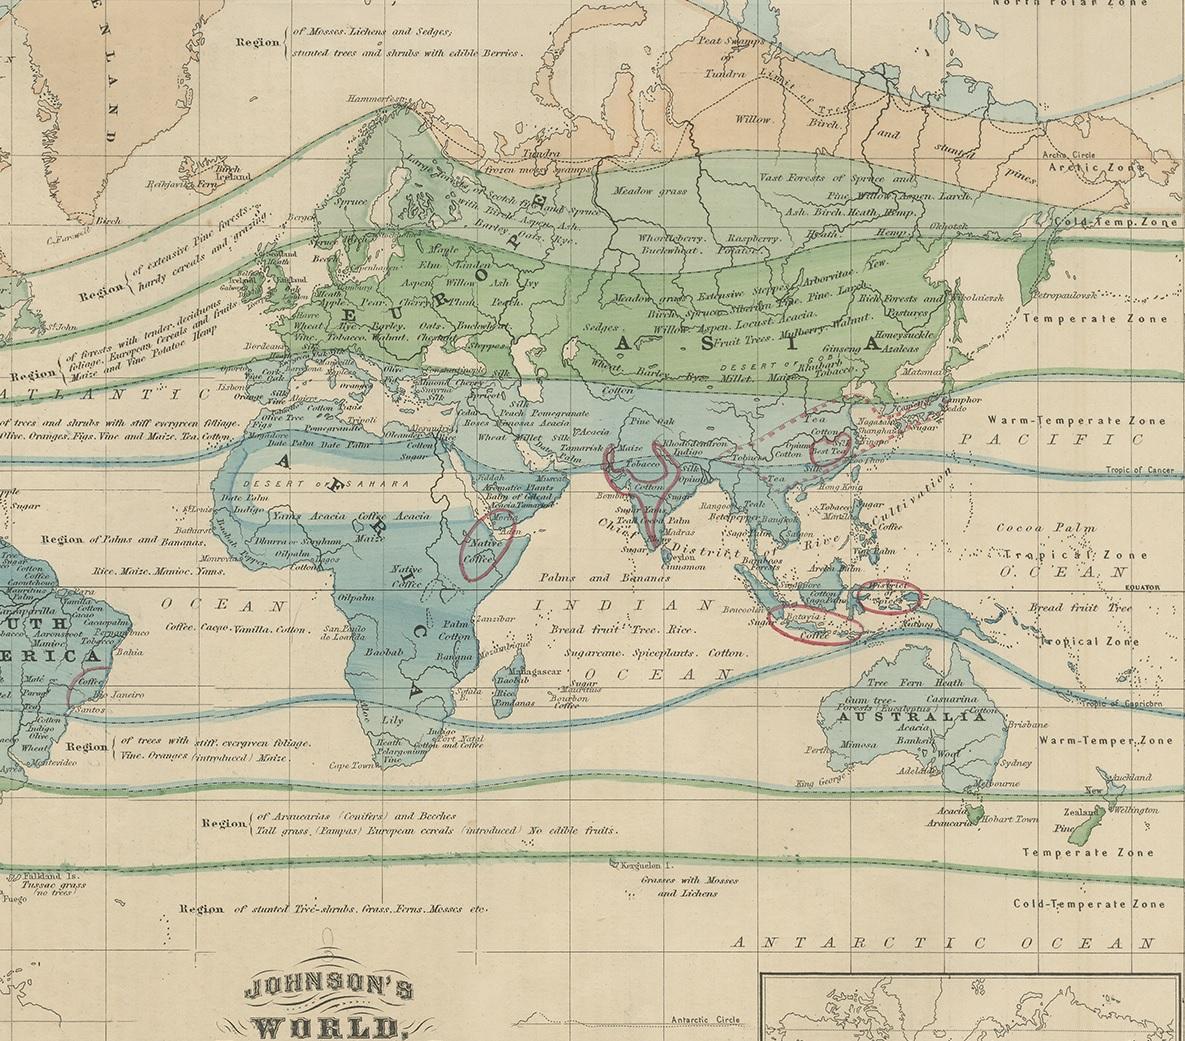 world map 1872